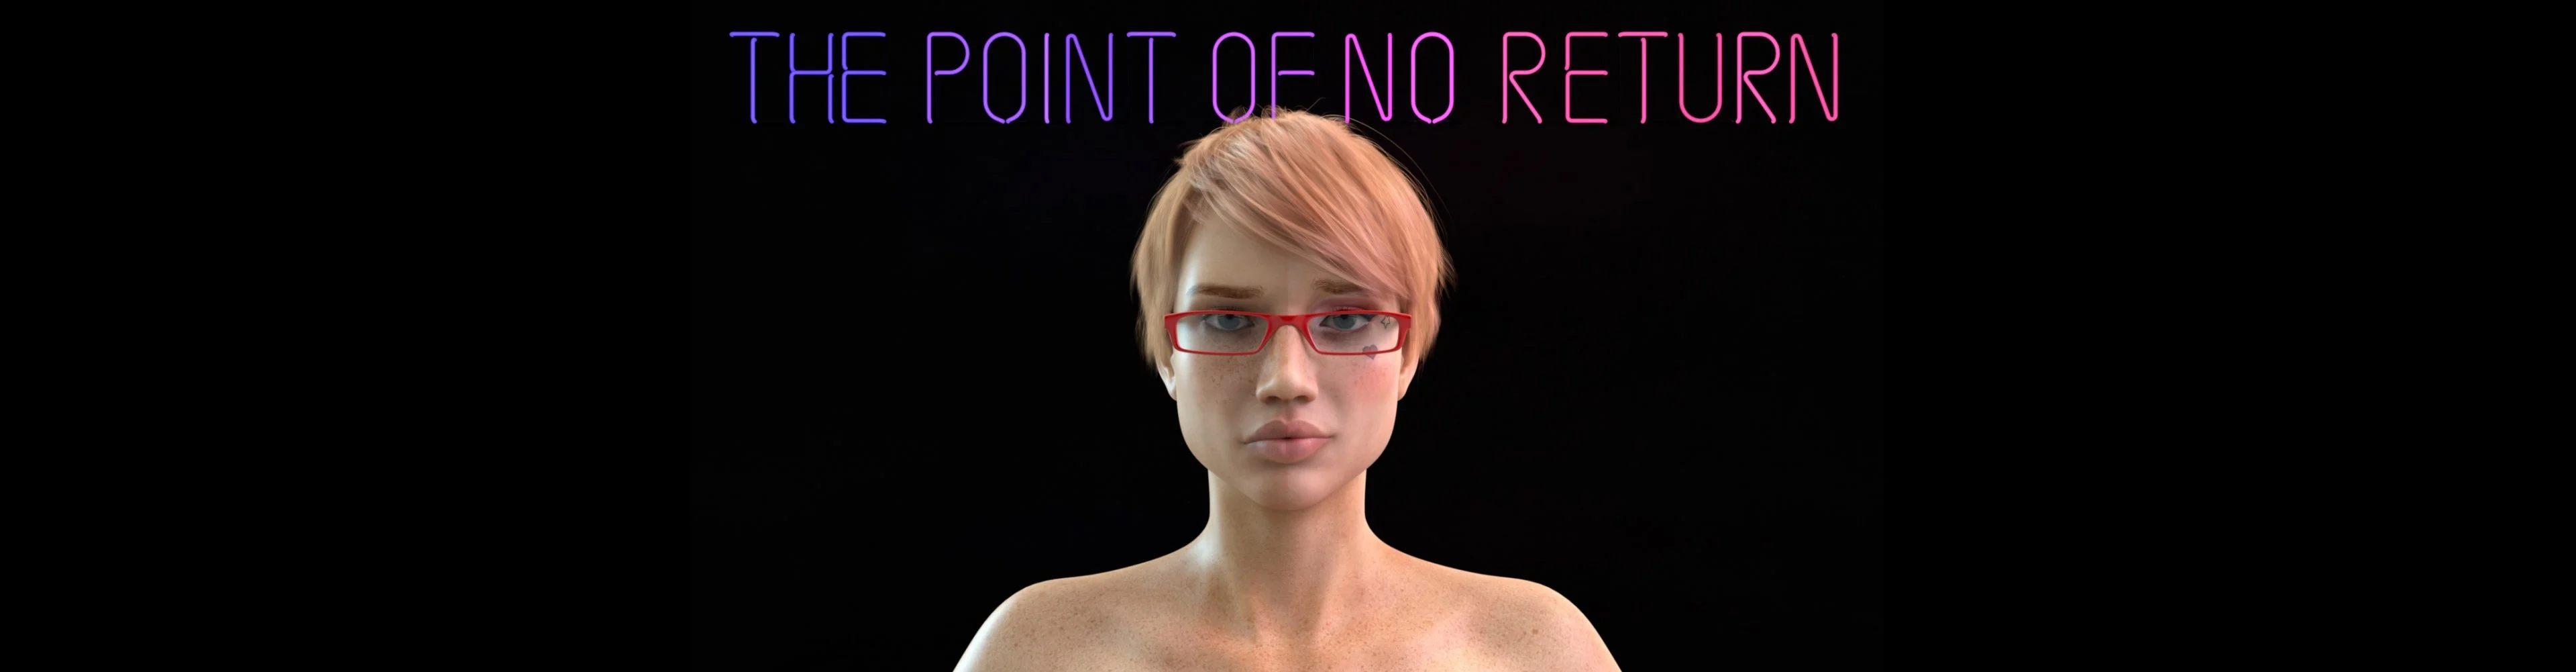 The Point of No Return [v0.1] main image